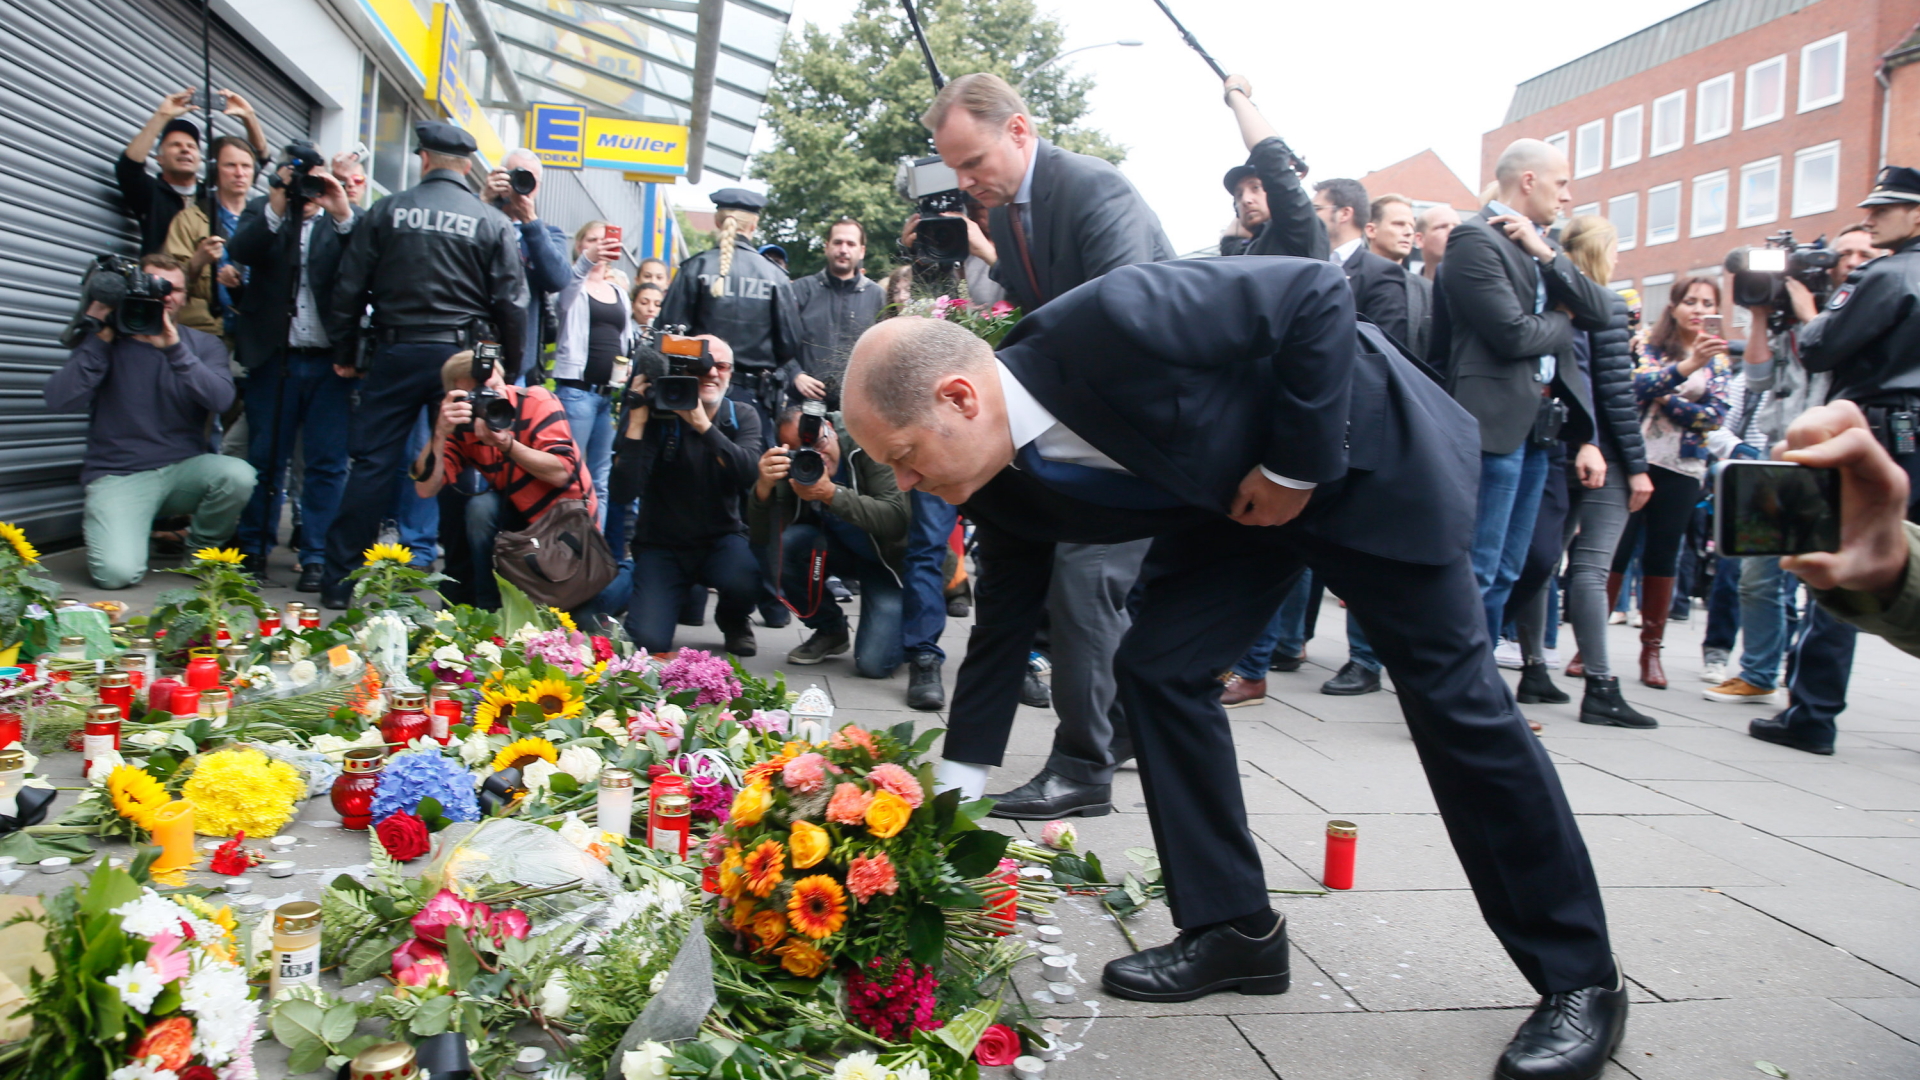 Hamburger Messerattacke: Staatsanwaltschaft ermittelt